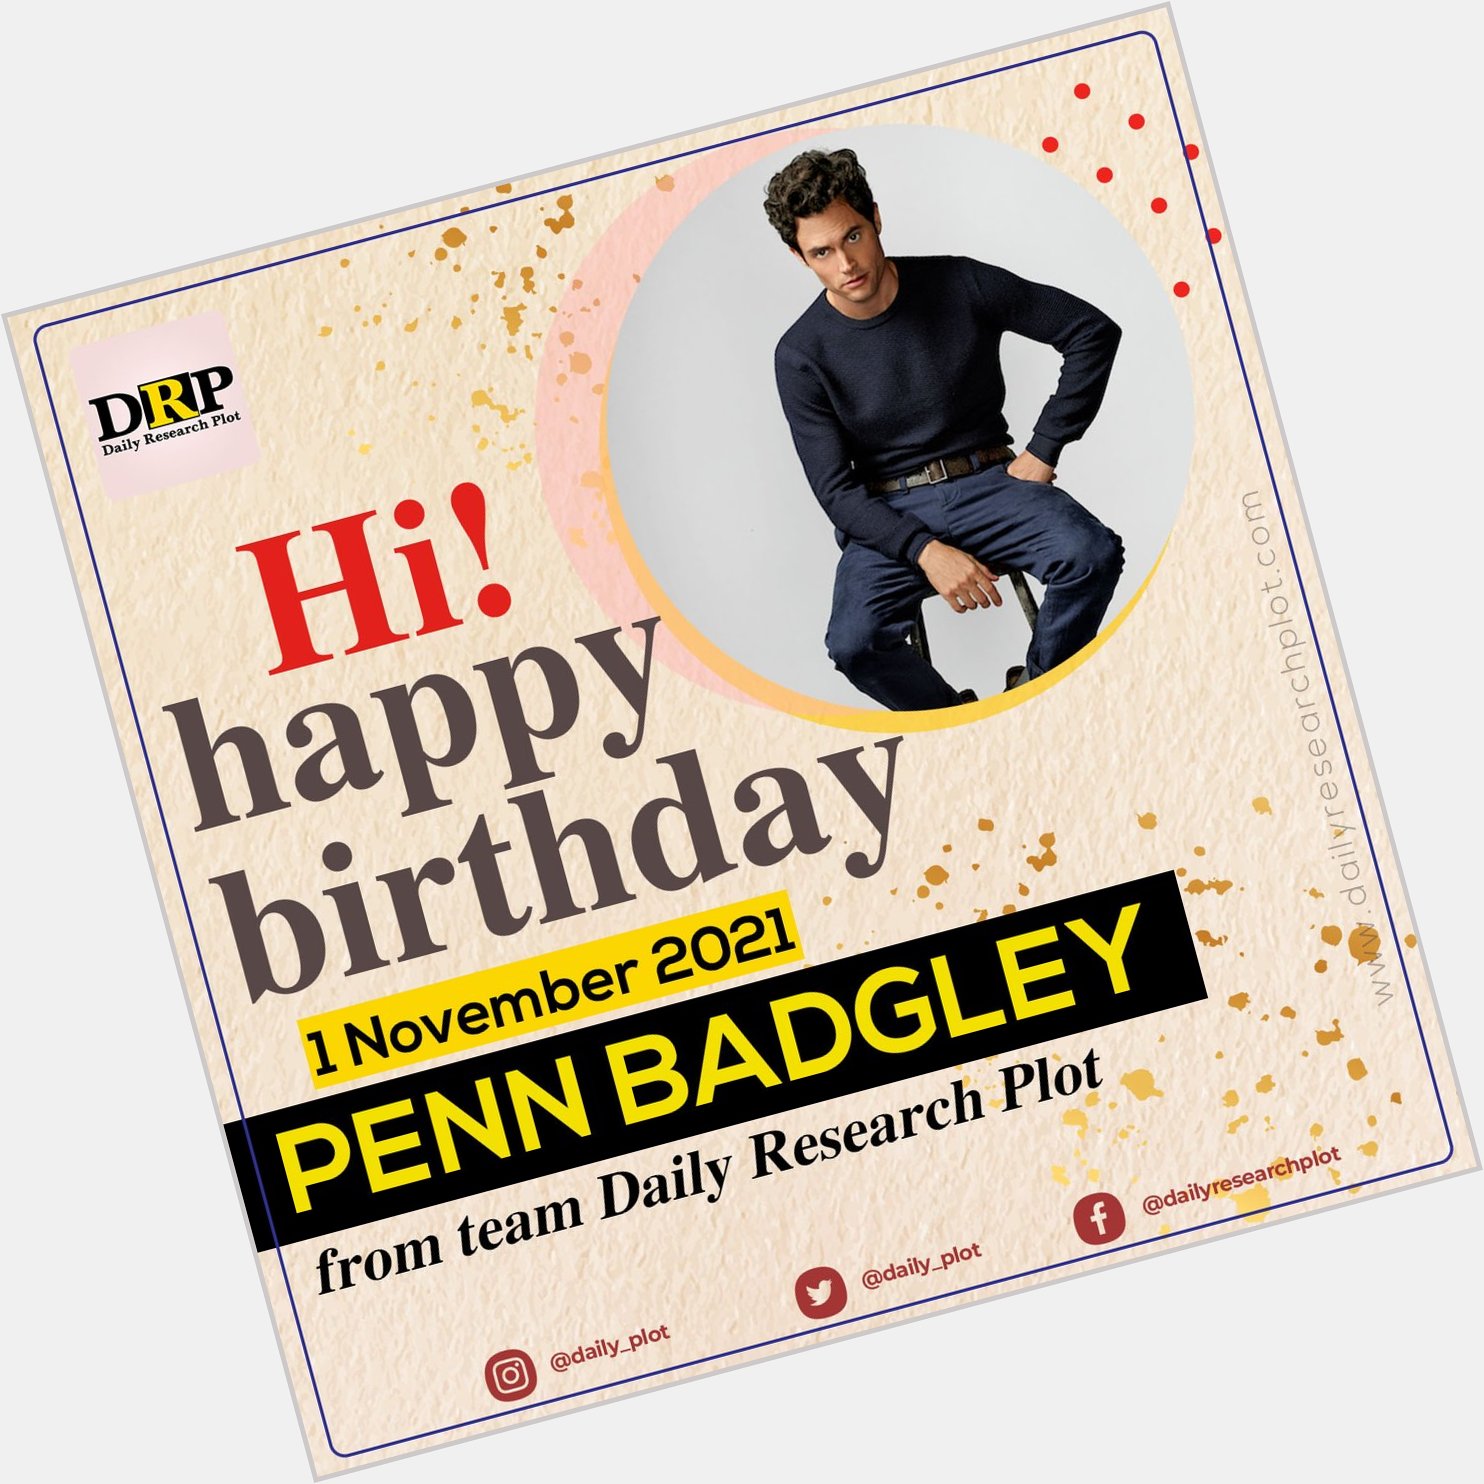 Happy Birthday!
Penn Badgley 